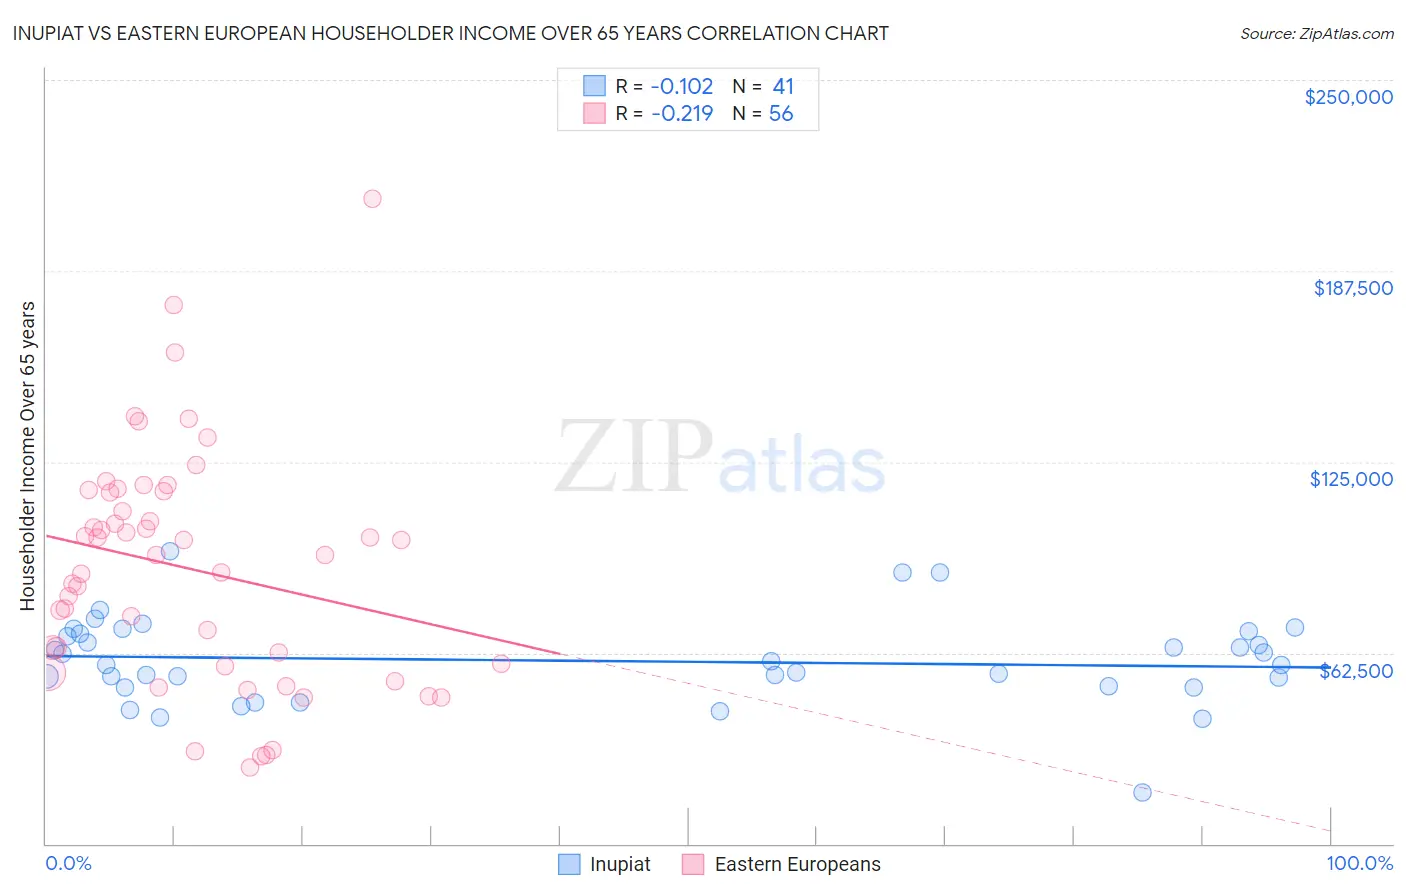 Inupiat vs Eastern European Householder Income Over 65 years